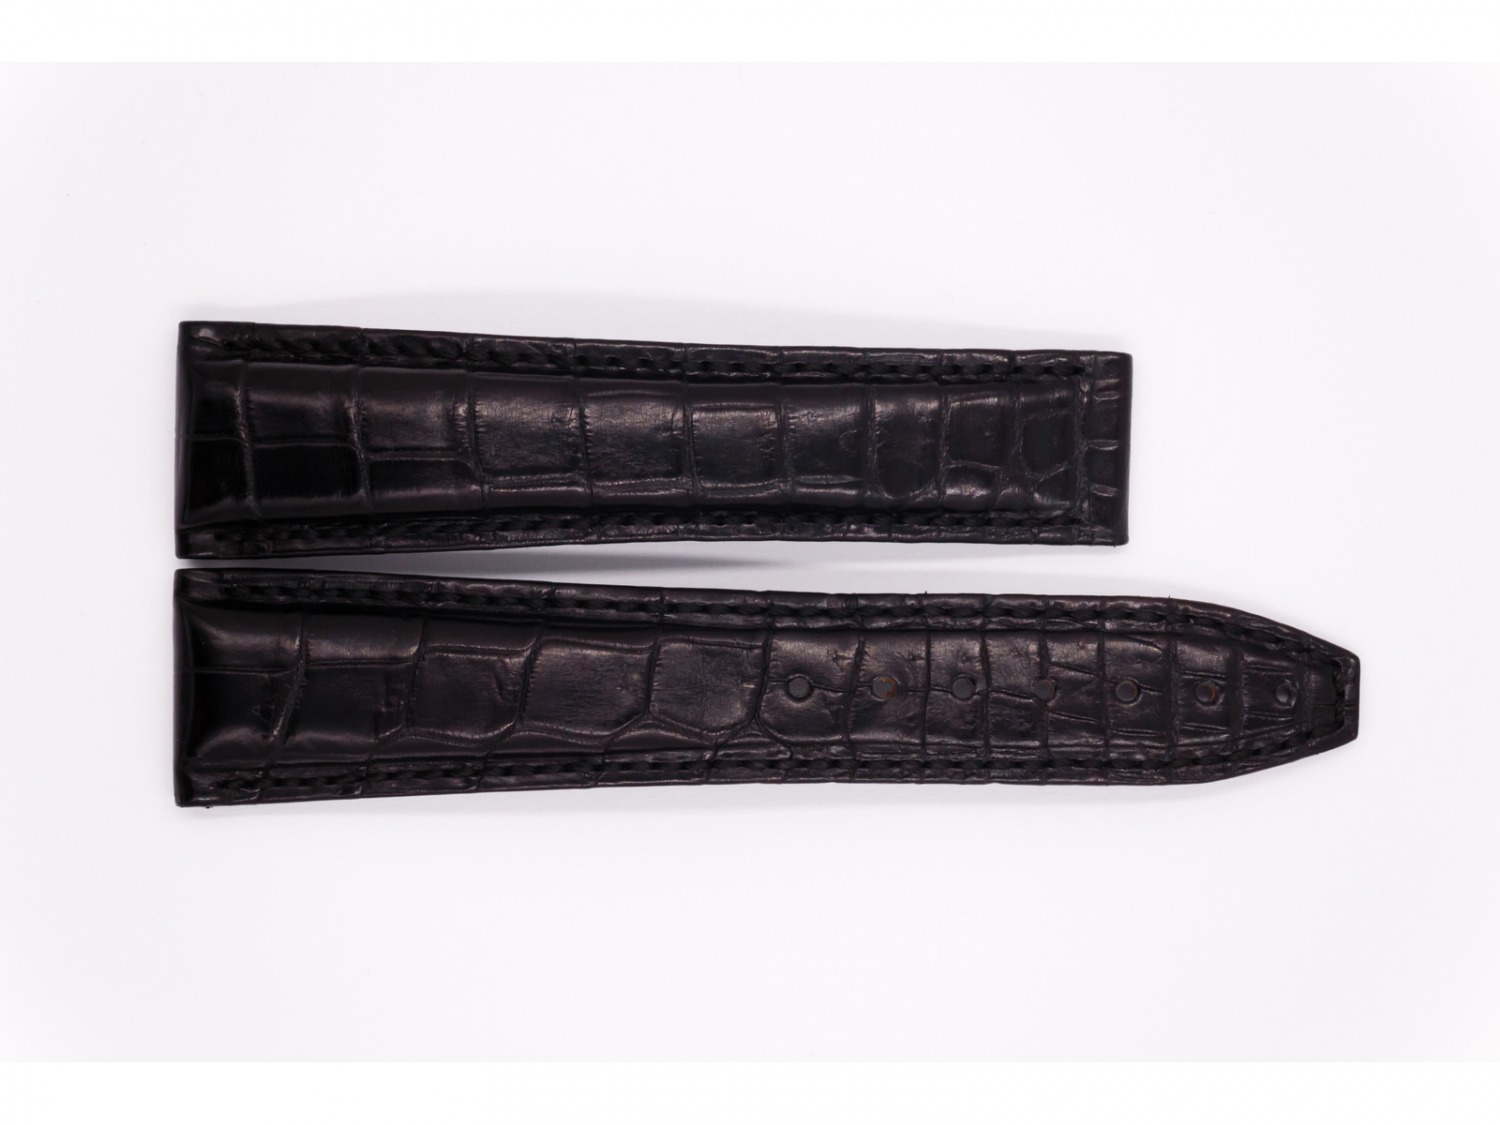 Croco Niloticus Leather Maurice Lacroix strap, black